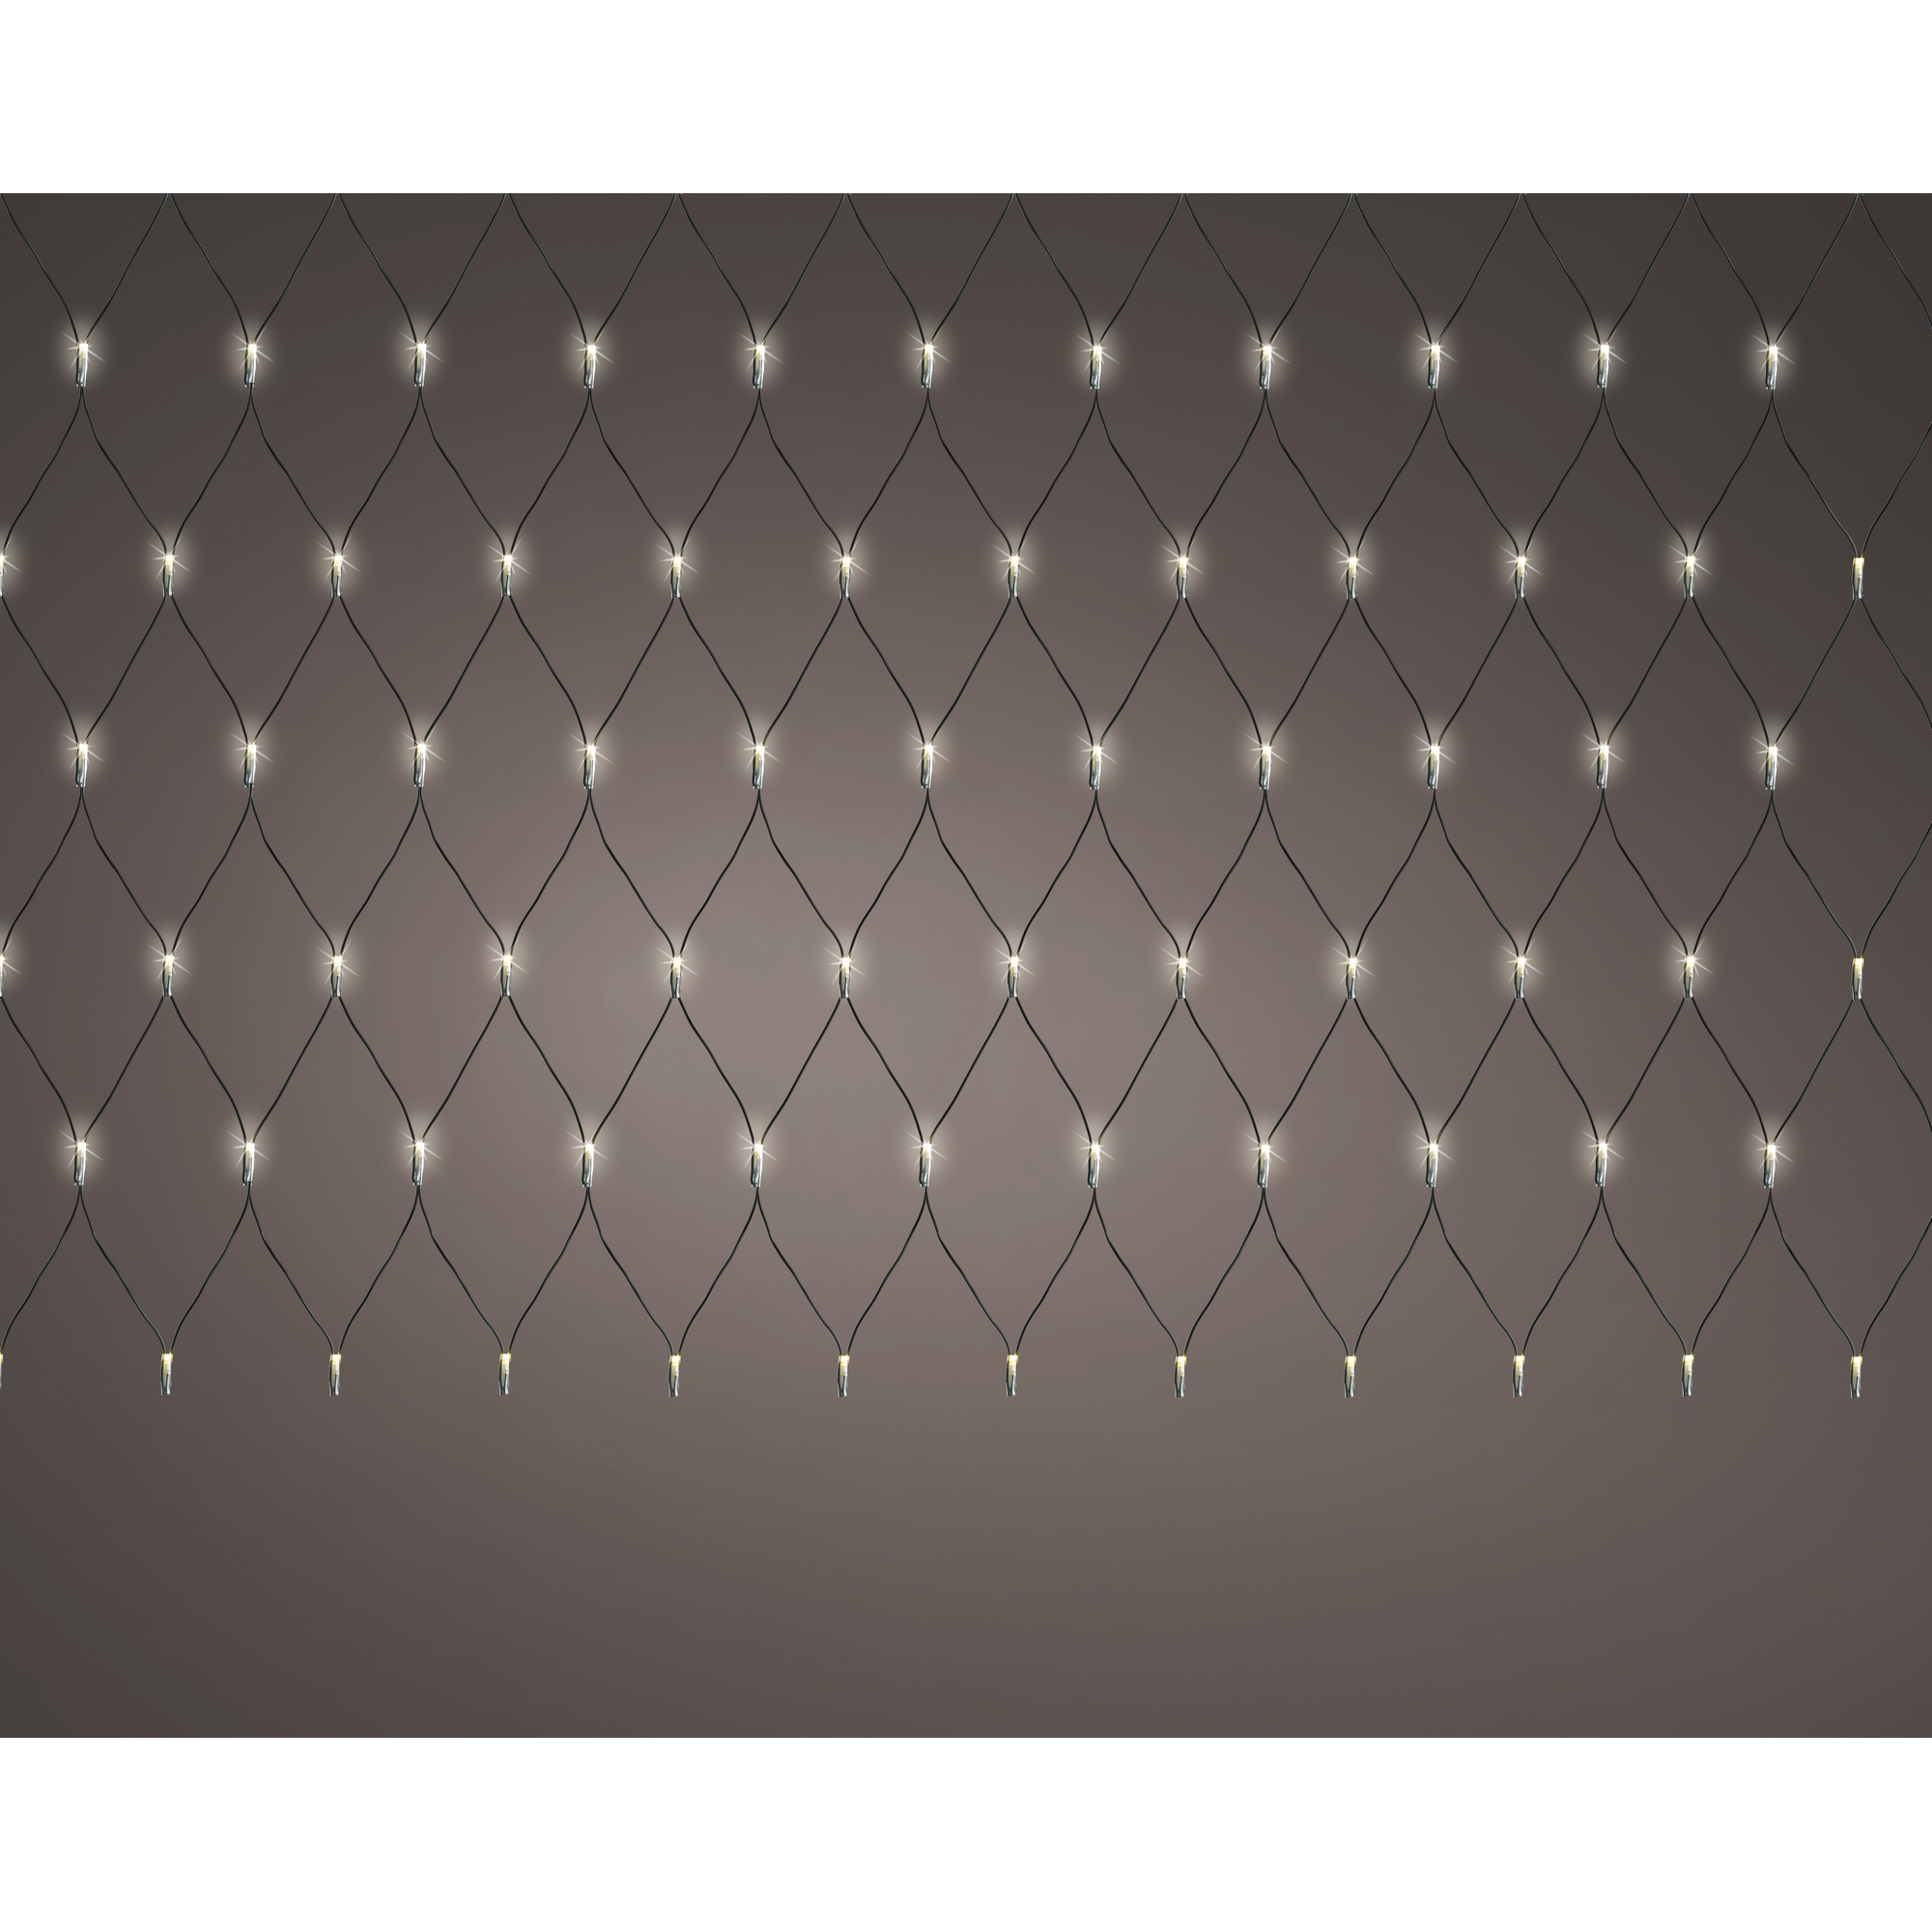 LED-Lichternetz 384 LEDs warmweiß 300 x 300 cm + product picture